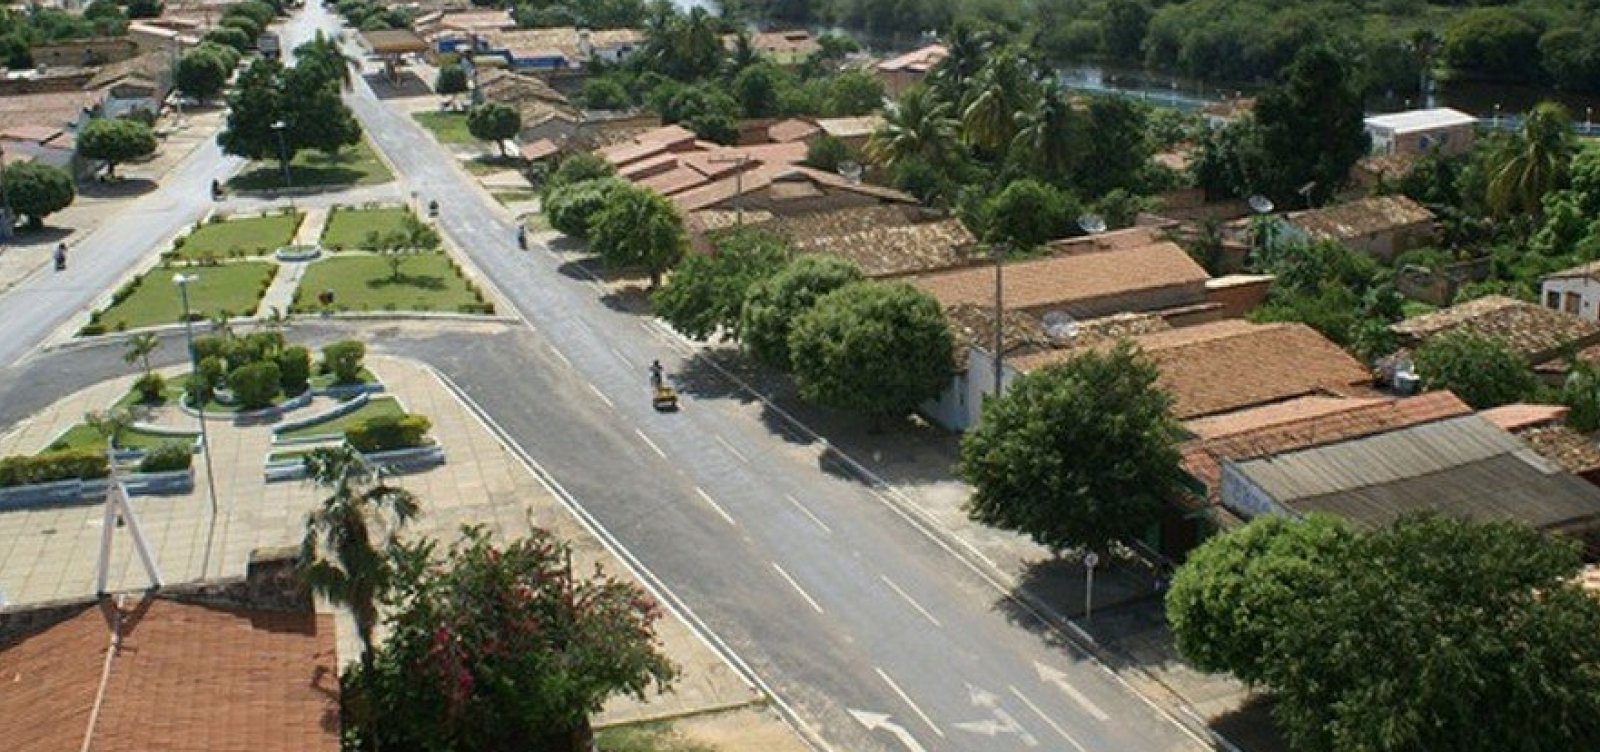  Santa Rita de Cássia tem menor temperatura do ano no estado